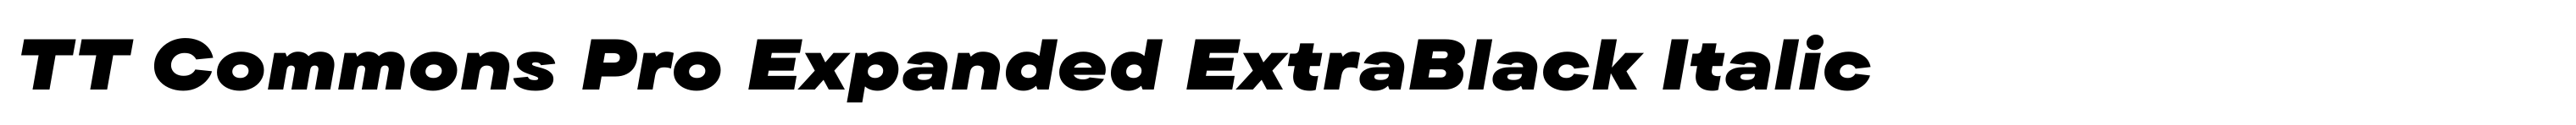 TT Commons Pro Expanded ExtraBlack Italic